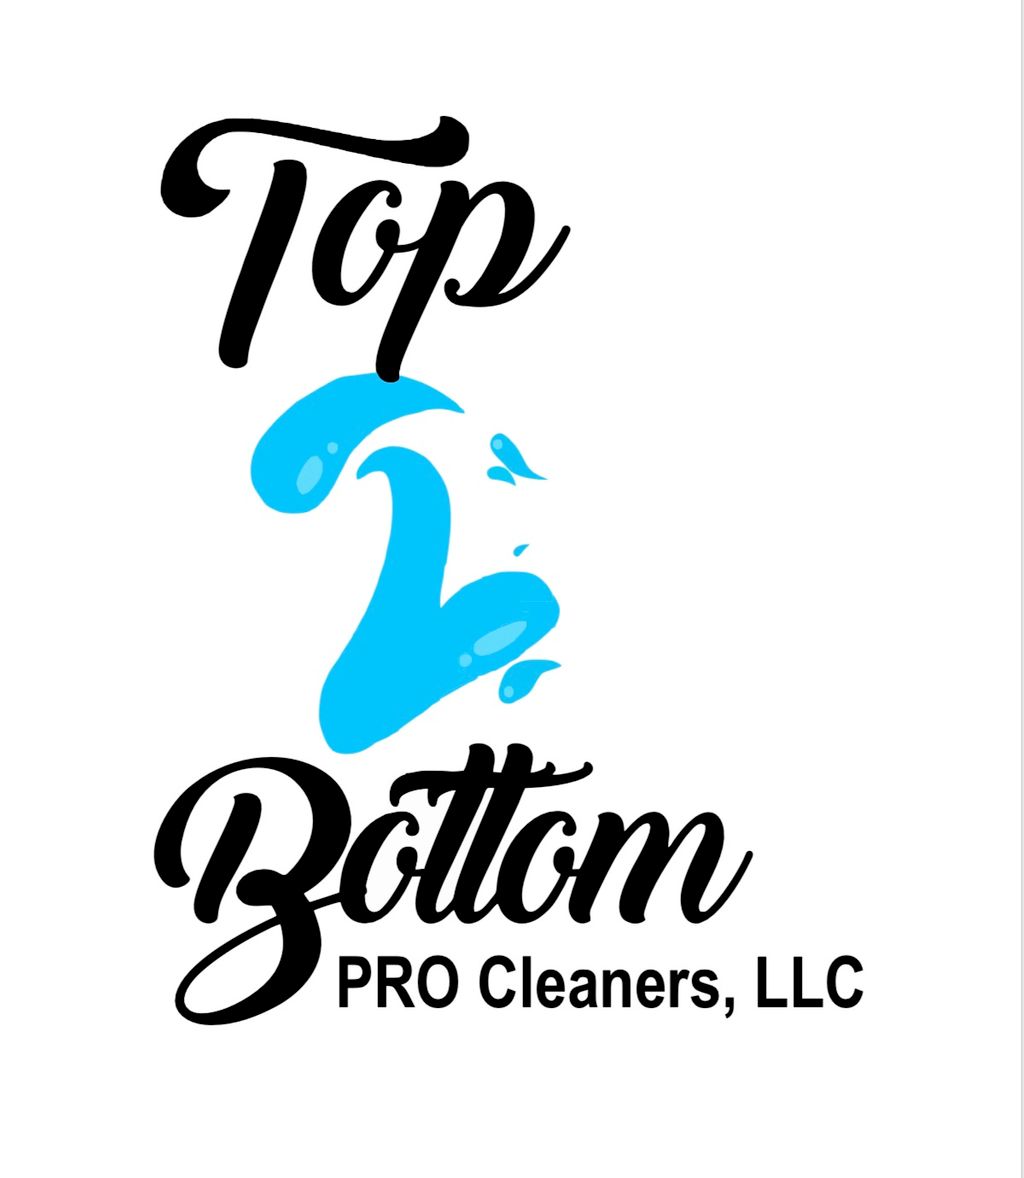 Top 2 Bottom Pro Cleaners, LLC